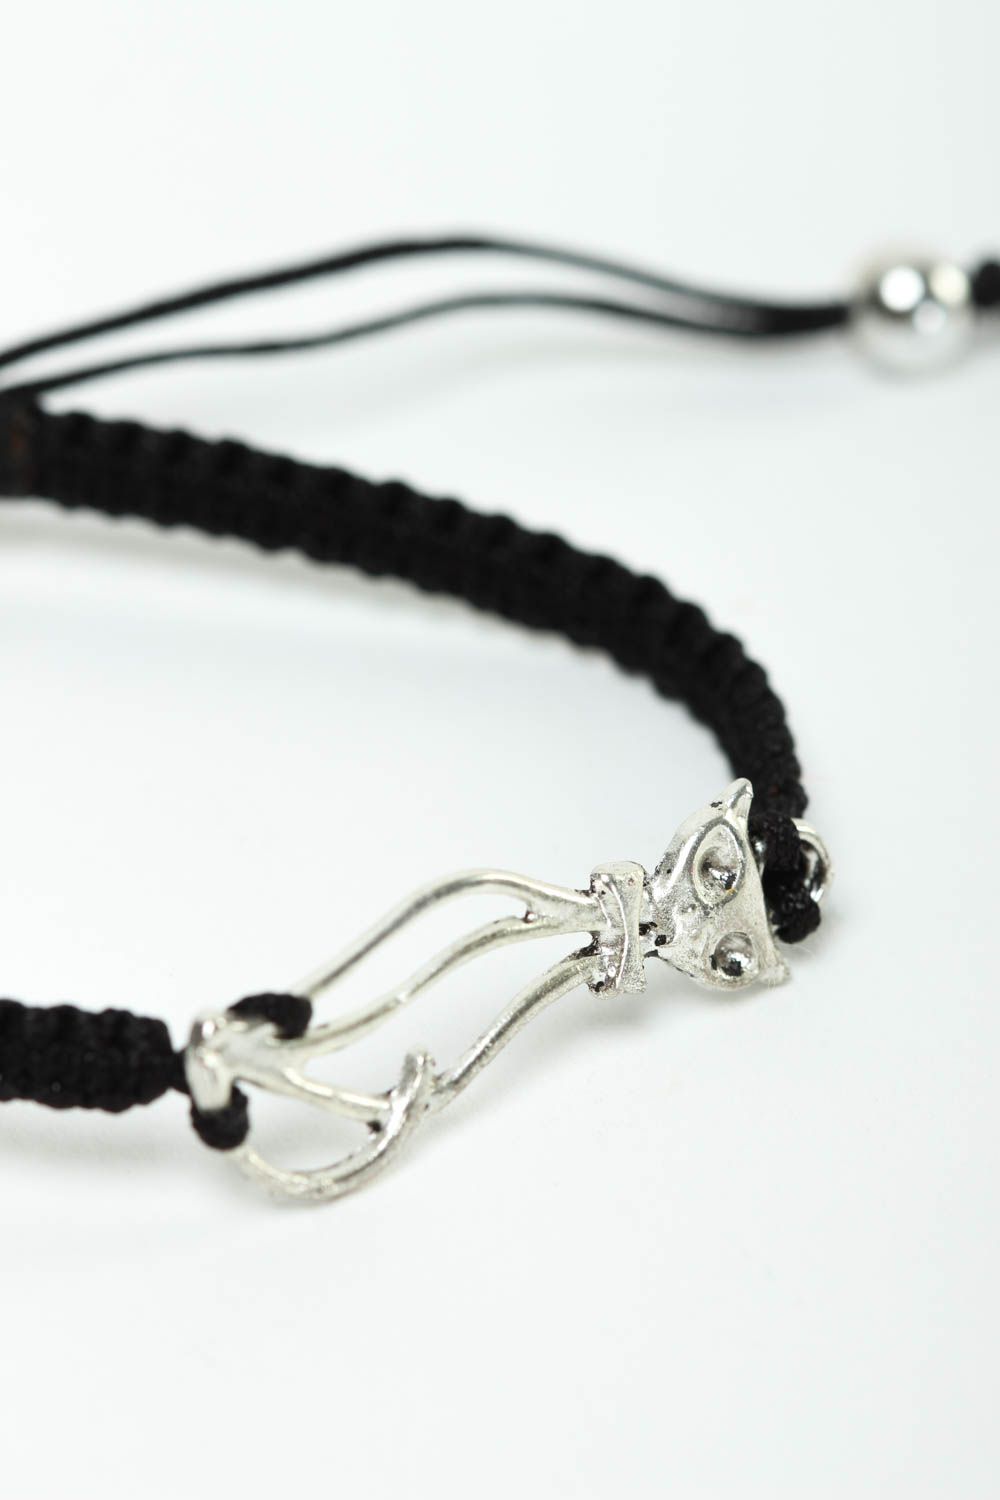 Stylish handmade wrist barcelet designs textile friendship bracelet gift ideas photo 3